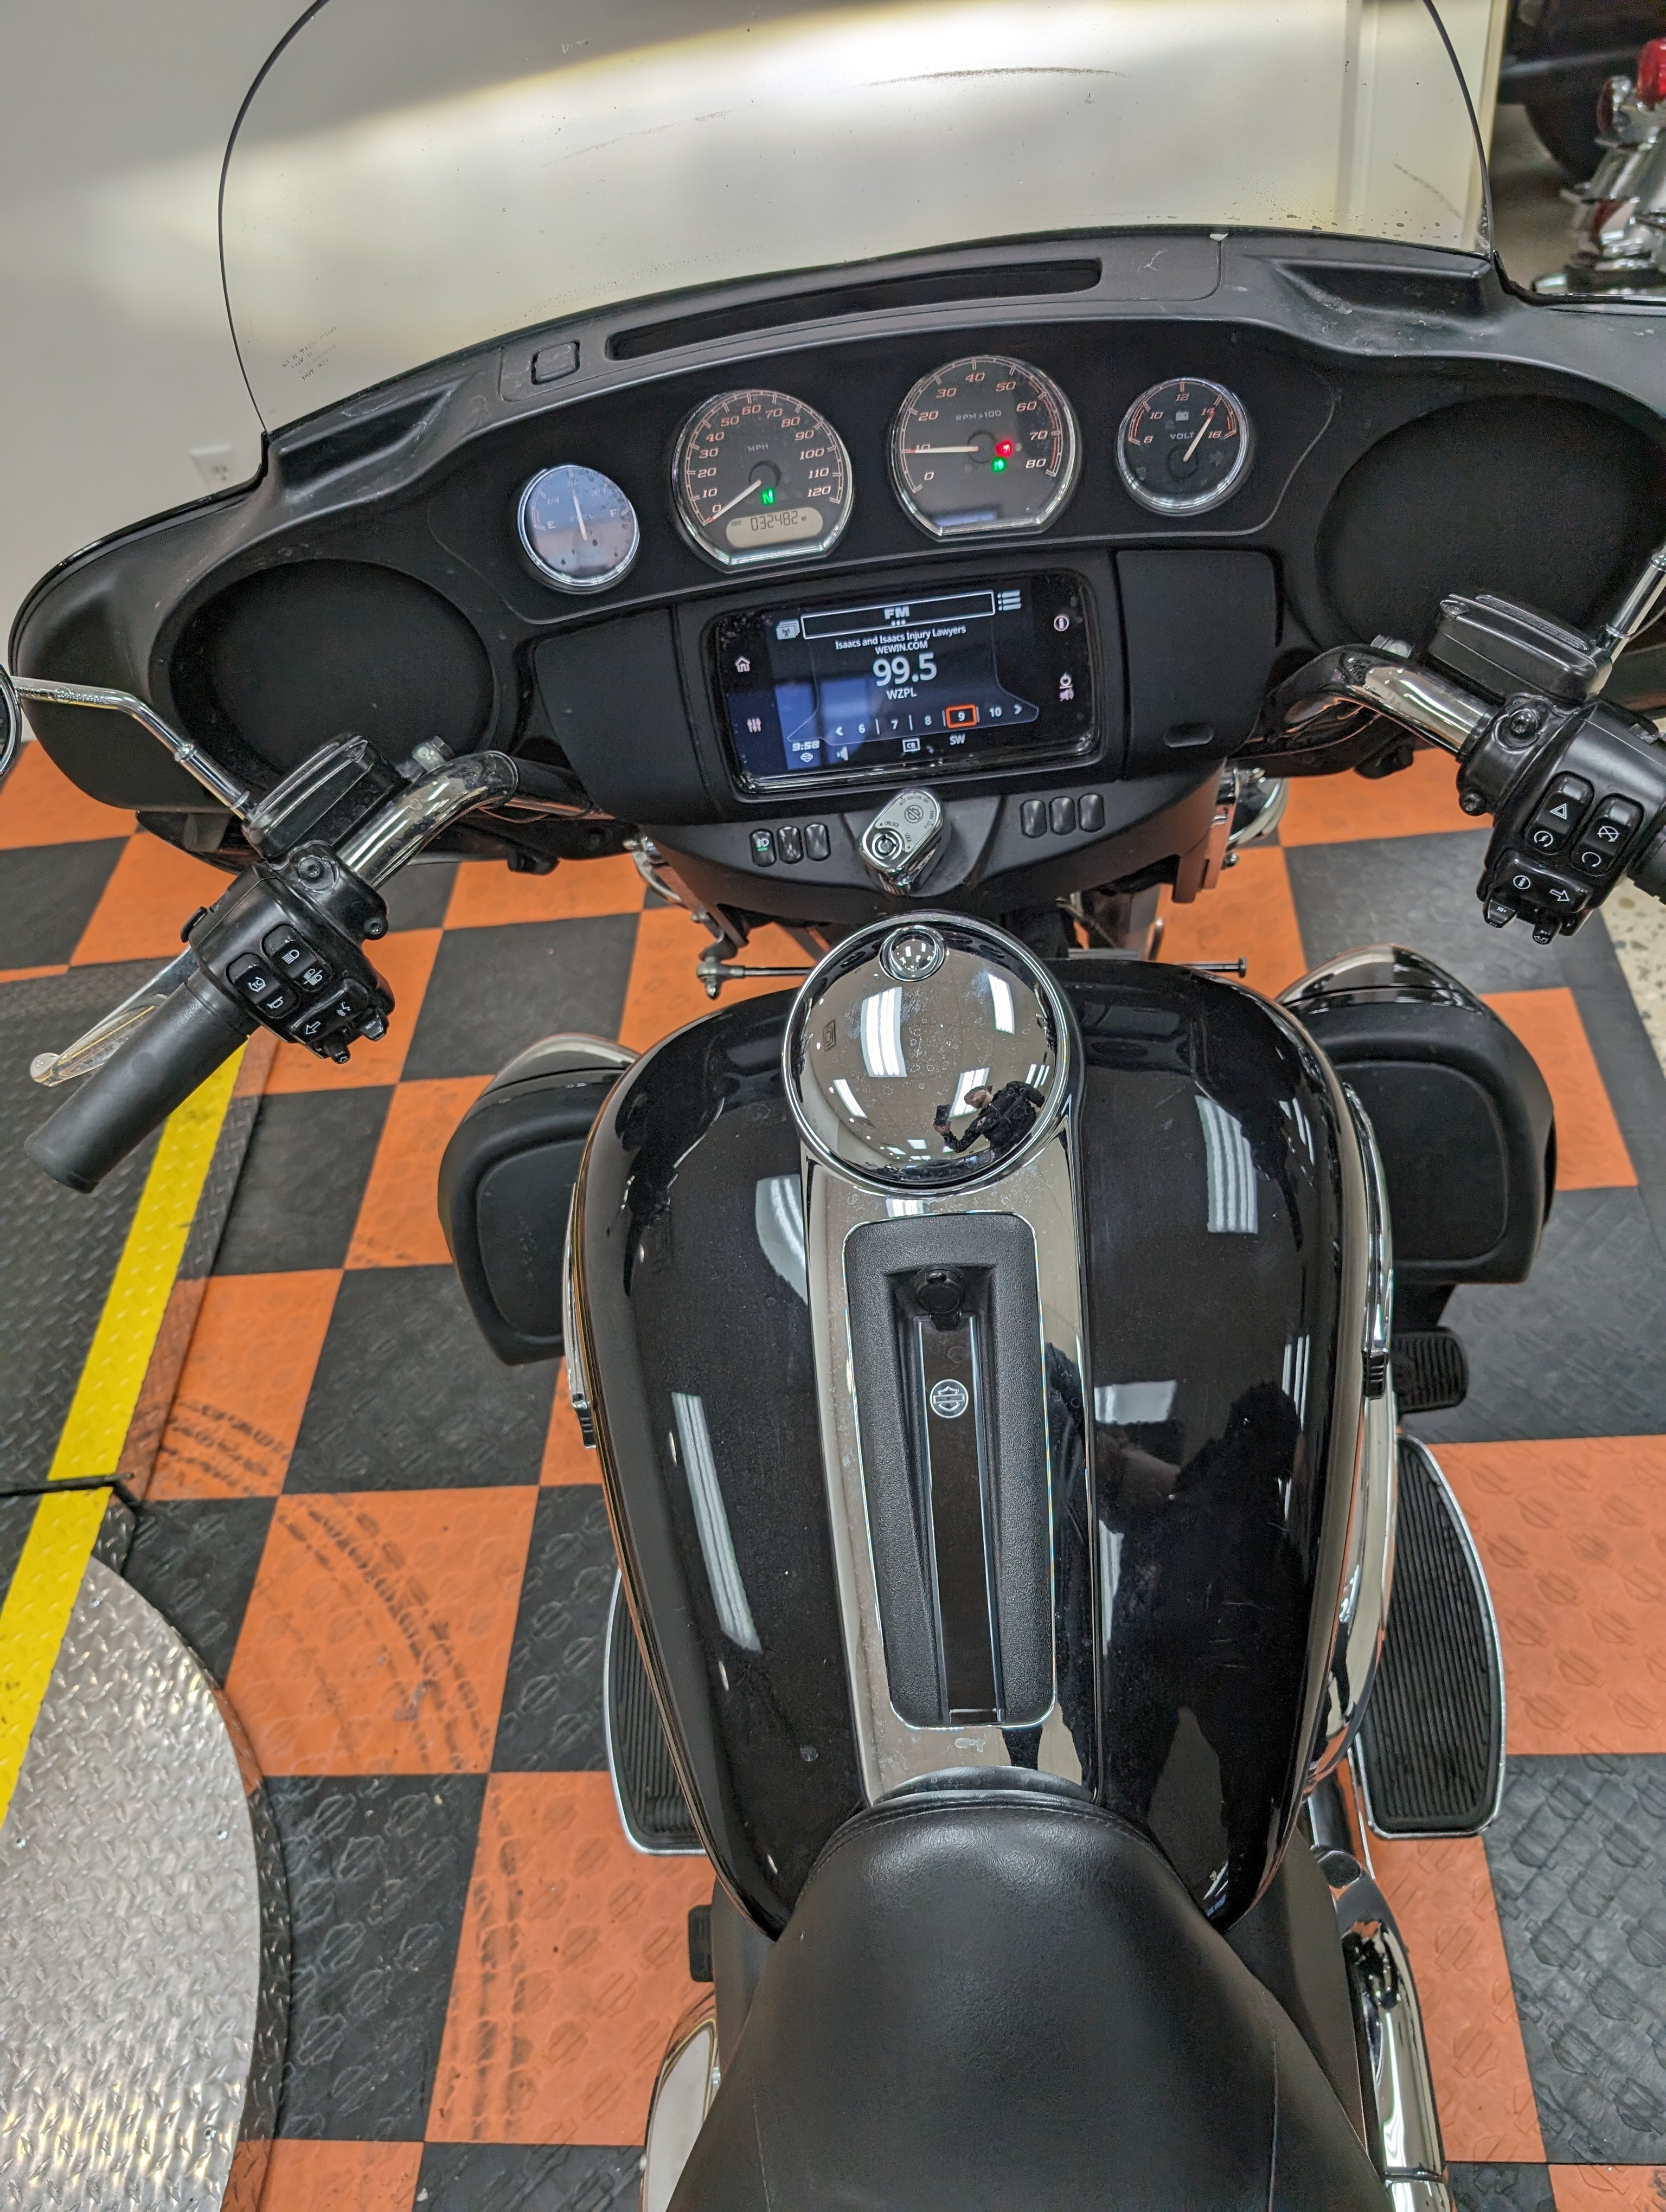 2019 Harley-Davidson Trike Tri Glide Ultra at Harley-Davidson of Indianapolis